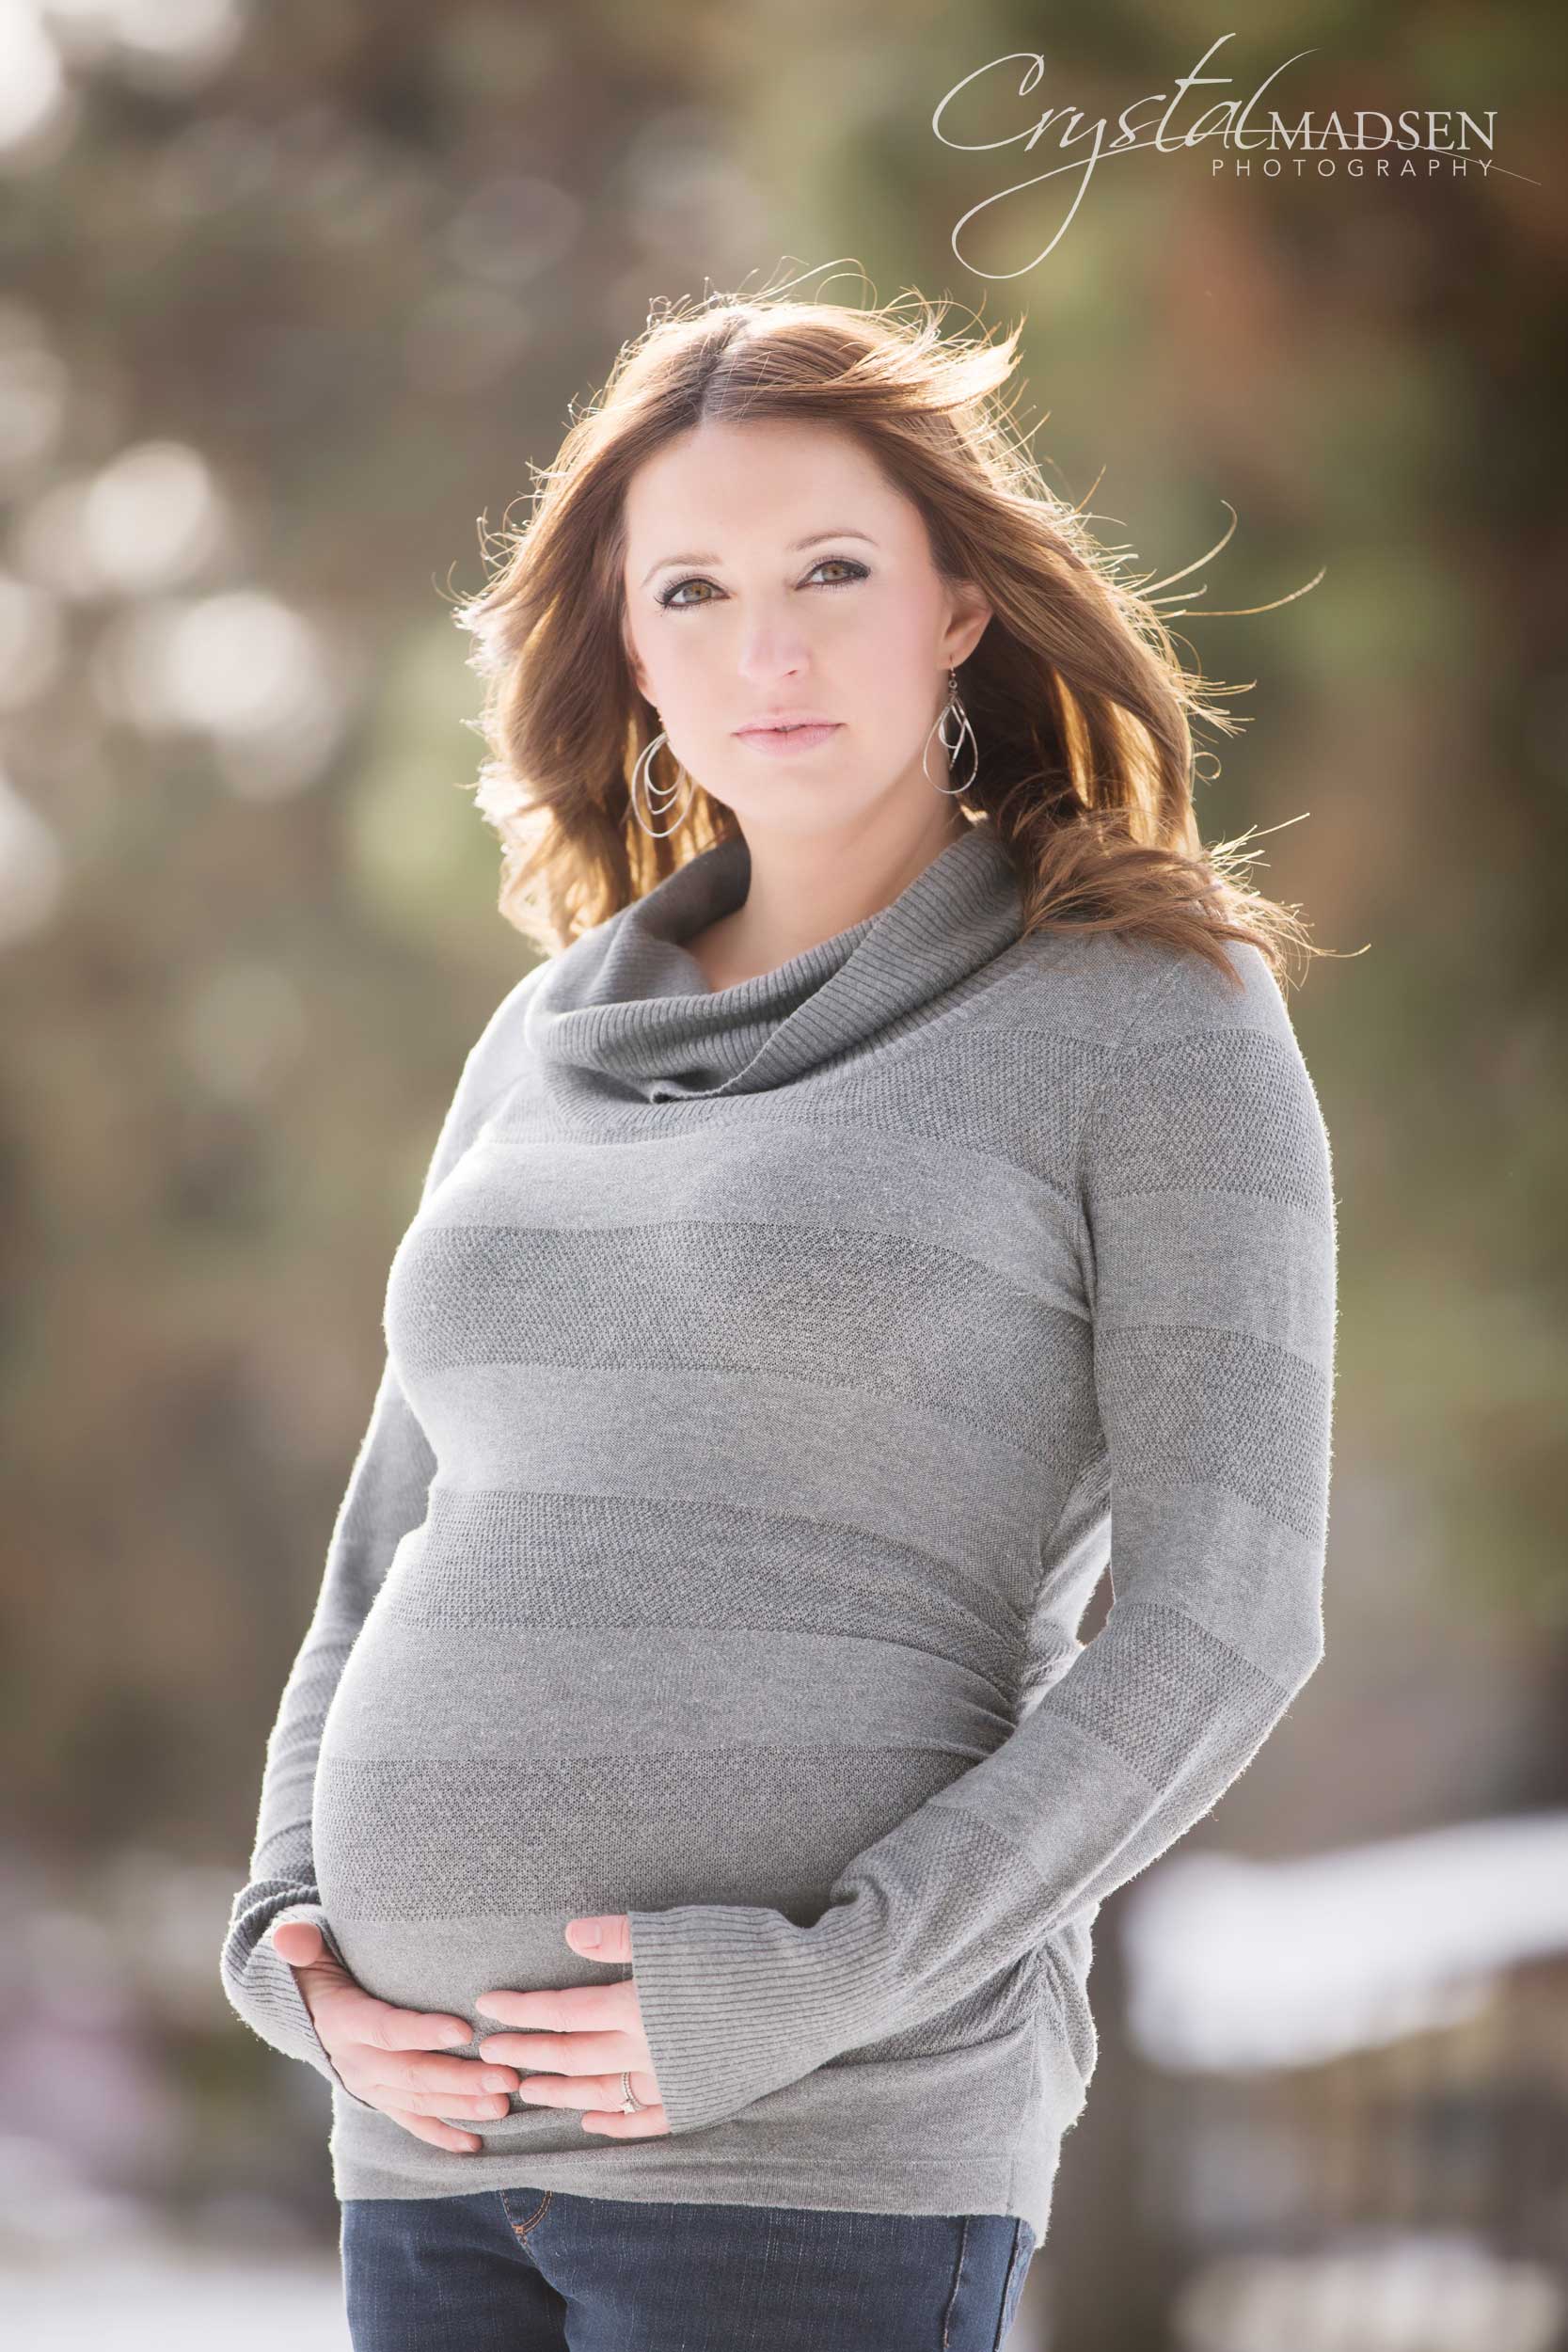 Beautiful Spokane Maternity Photos